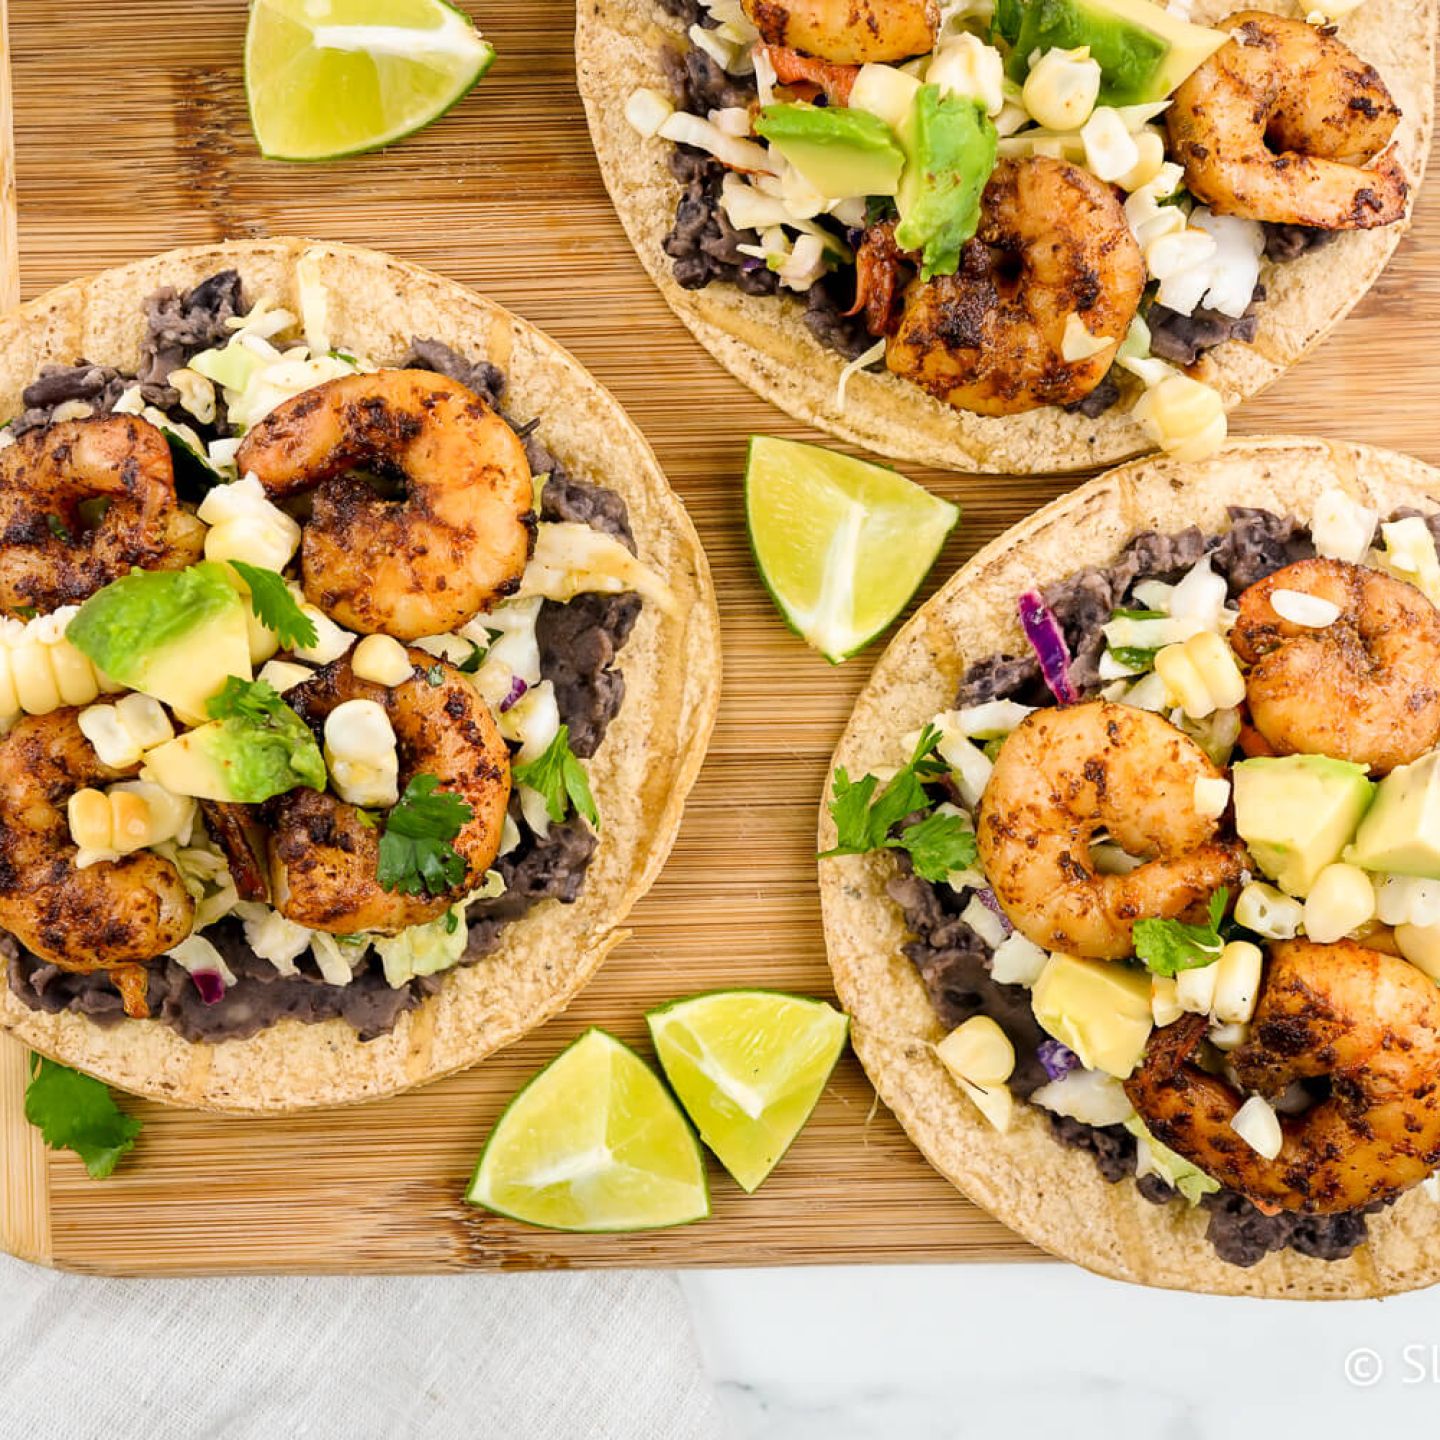 Shrimp tostadas with black beans, cabbage, spiced shrimp, avocado, and corn on baked tortillas.